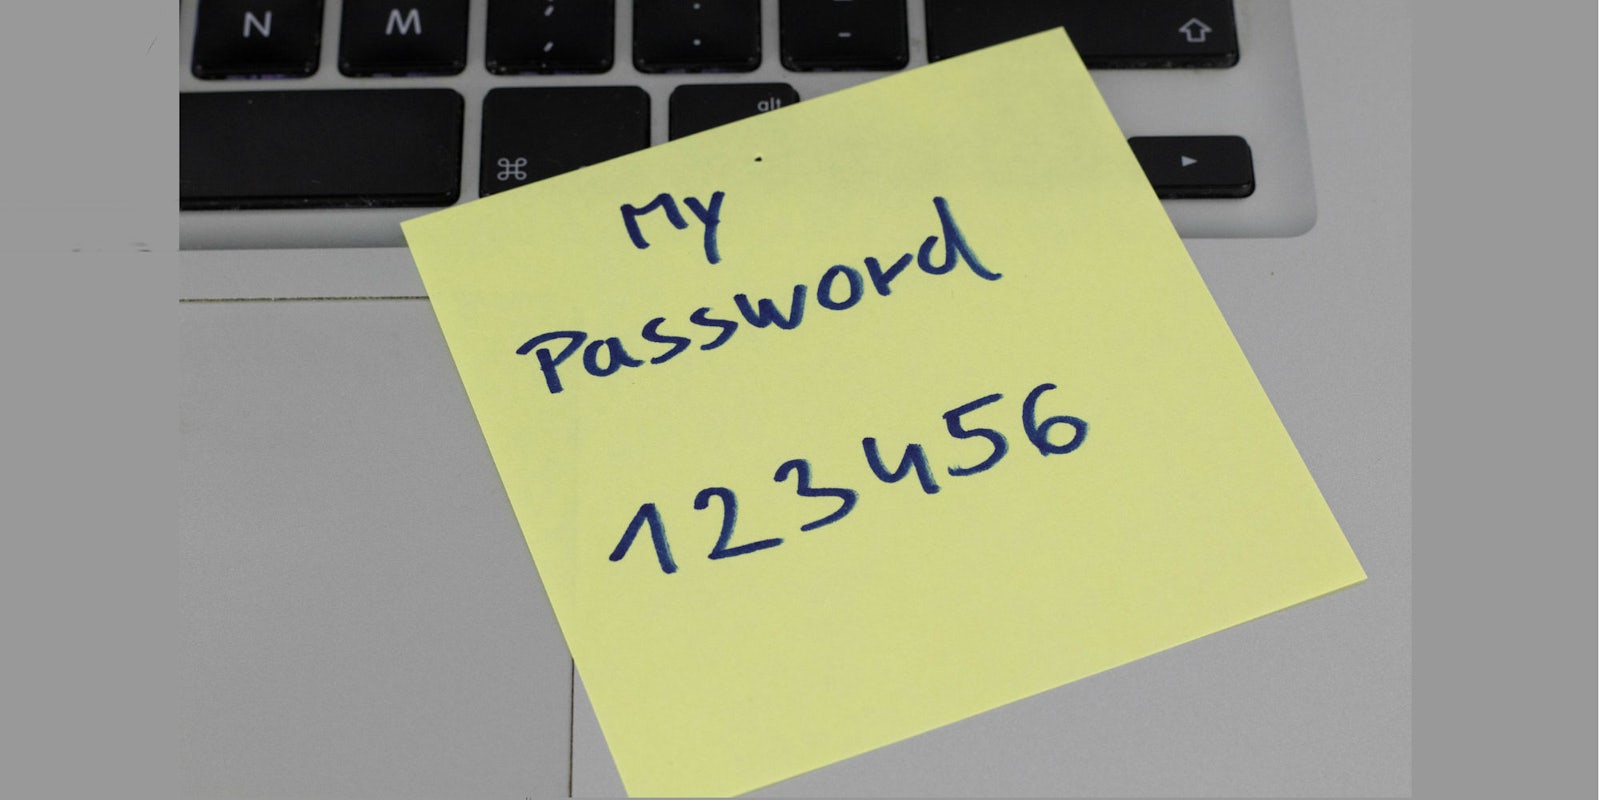 Bad passwords